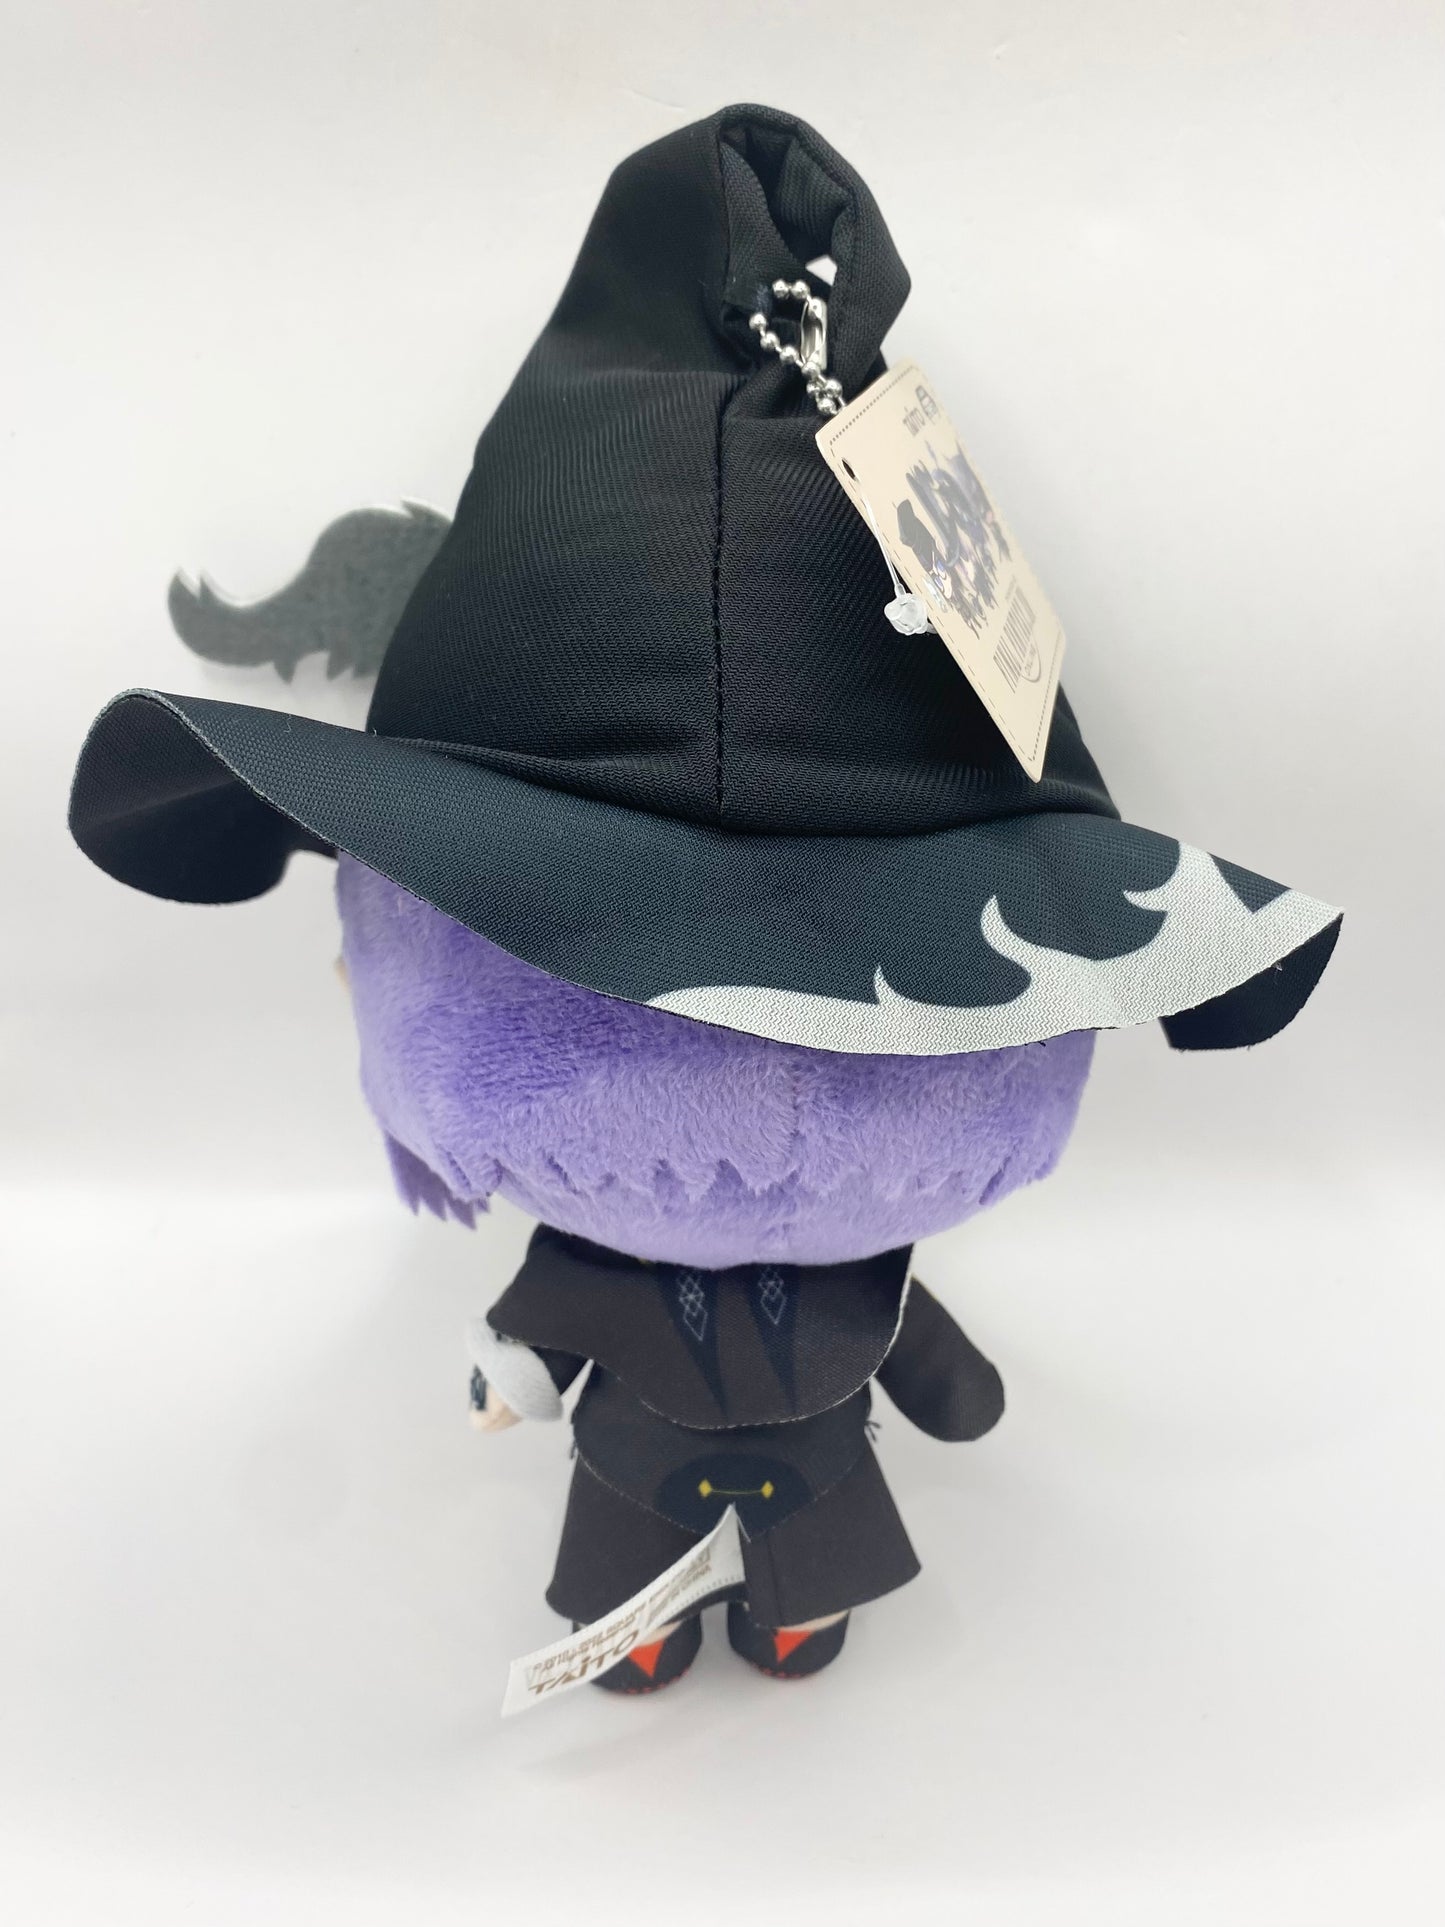 TAITO FINAL FANTASY XIV Job Plush Toy Mascot Vol2 Black Mage Prize Japan